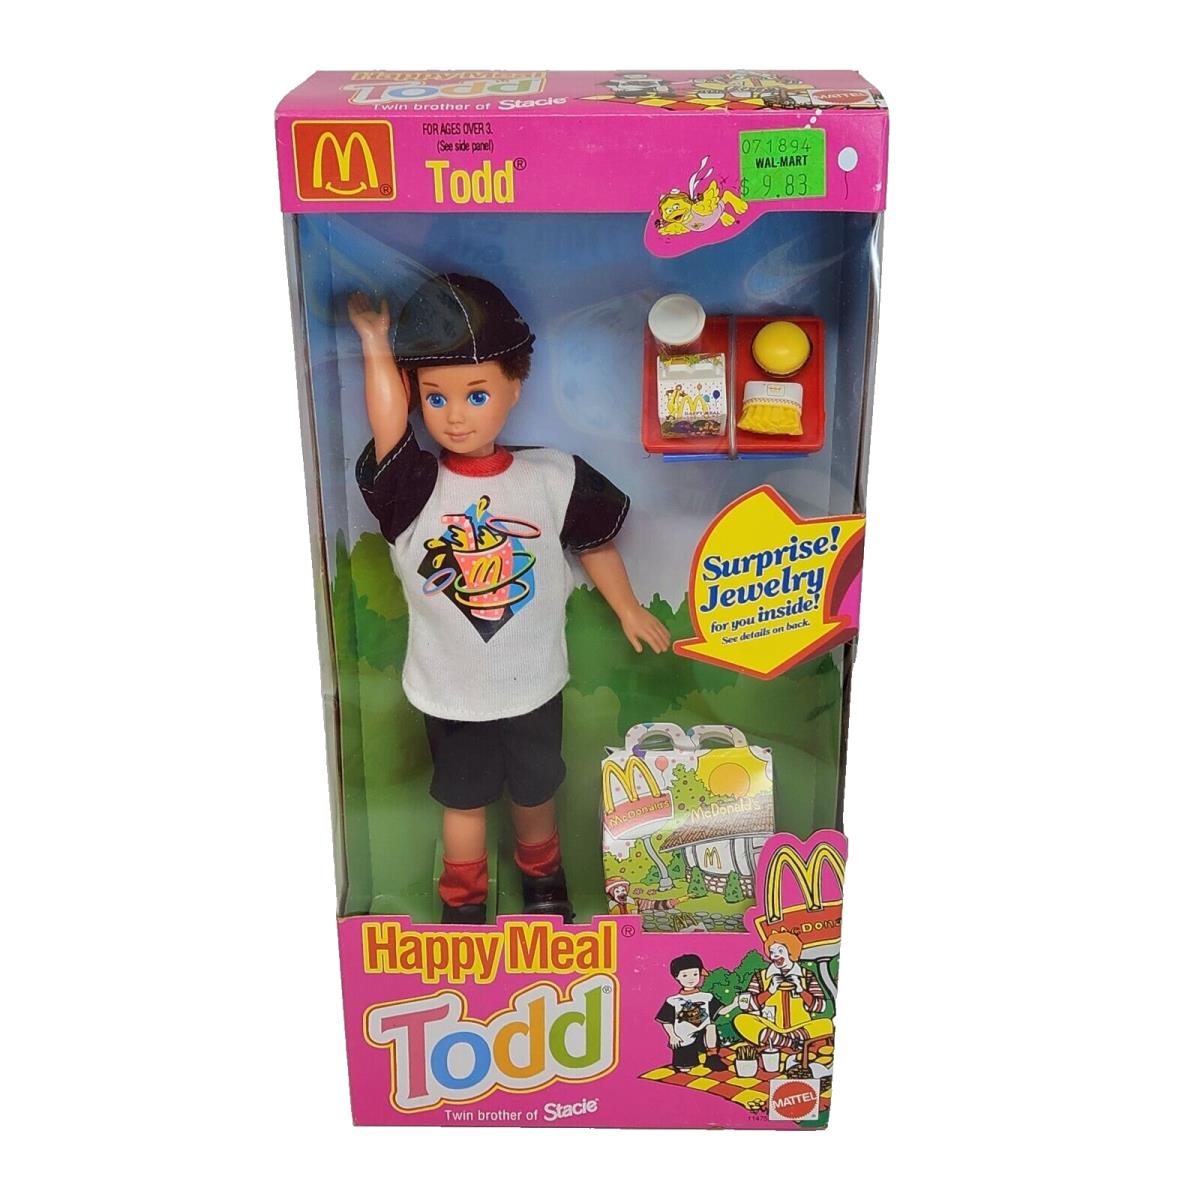 Vintage 1993 Barbie Mcdonald`s Happy Meal Todd Doll 11475 Mattel